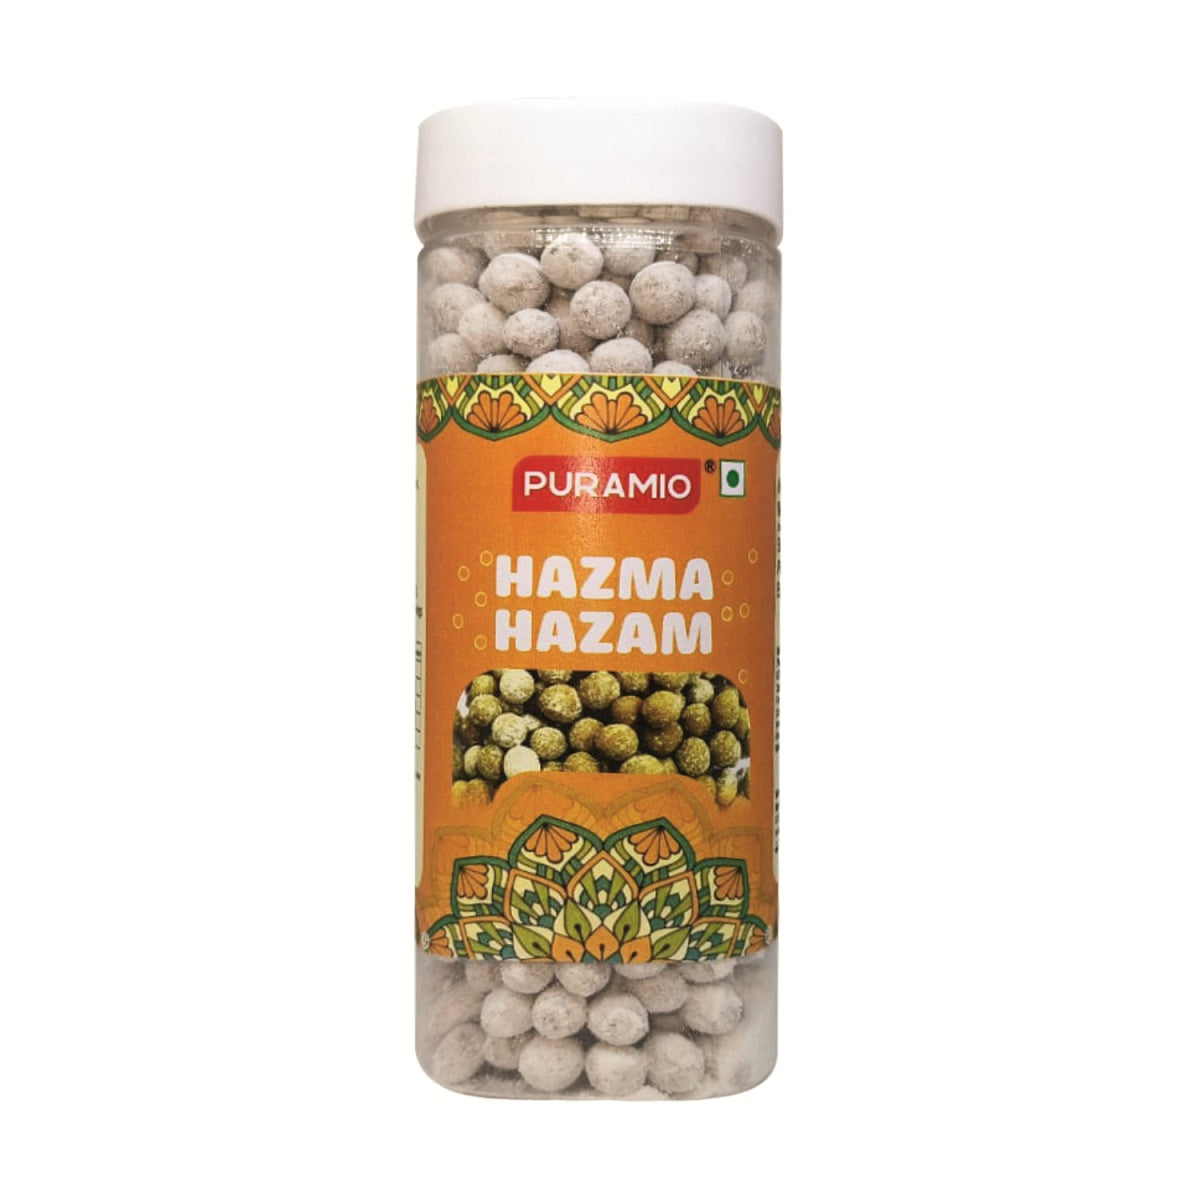 Puramio Hazma Hazam | Pure and Premium | Good for Digestion | After Meal Digestive Mouth Freshner,